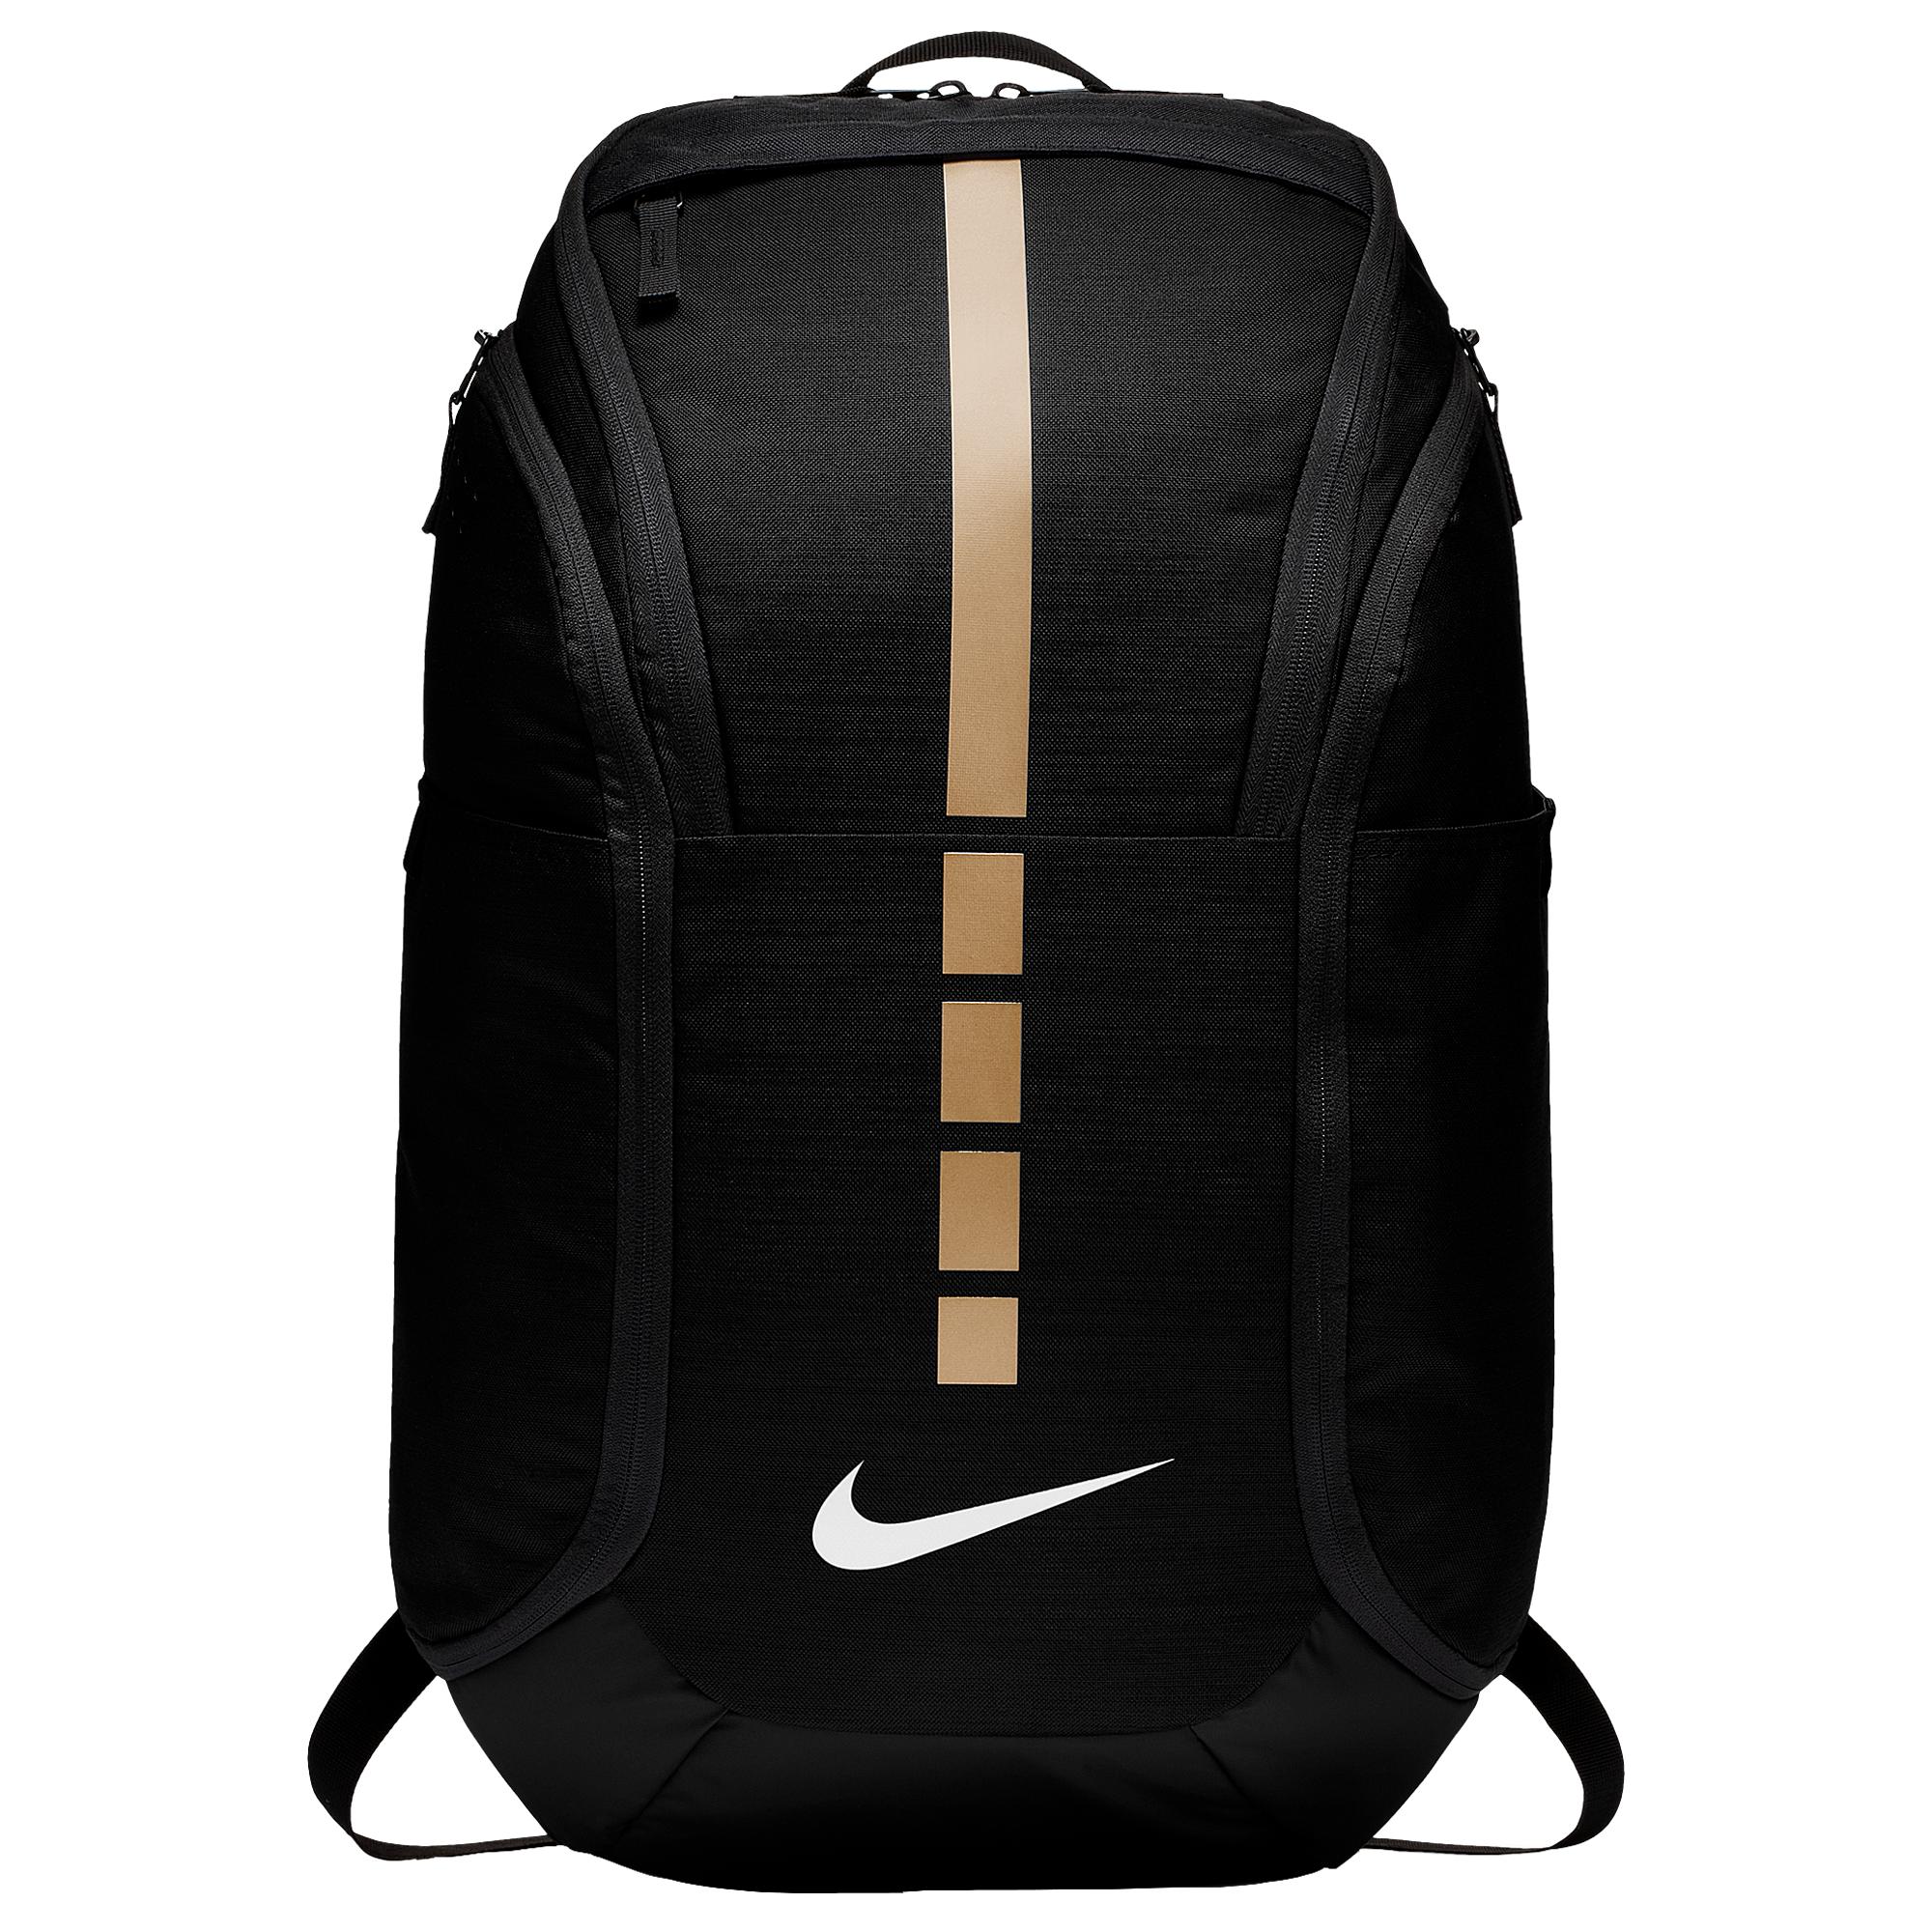 Nike Synthetic Hoops Elite Pro Basketball Backpack in Black/Metallic Gold  (Black) for Men - Lyst